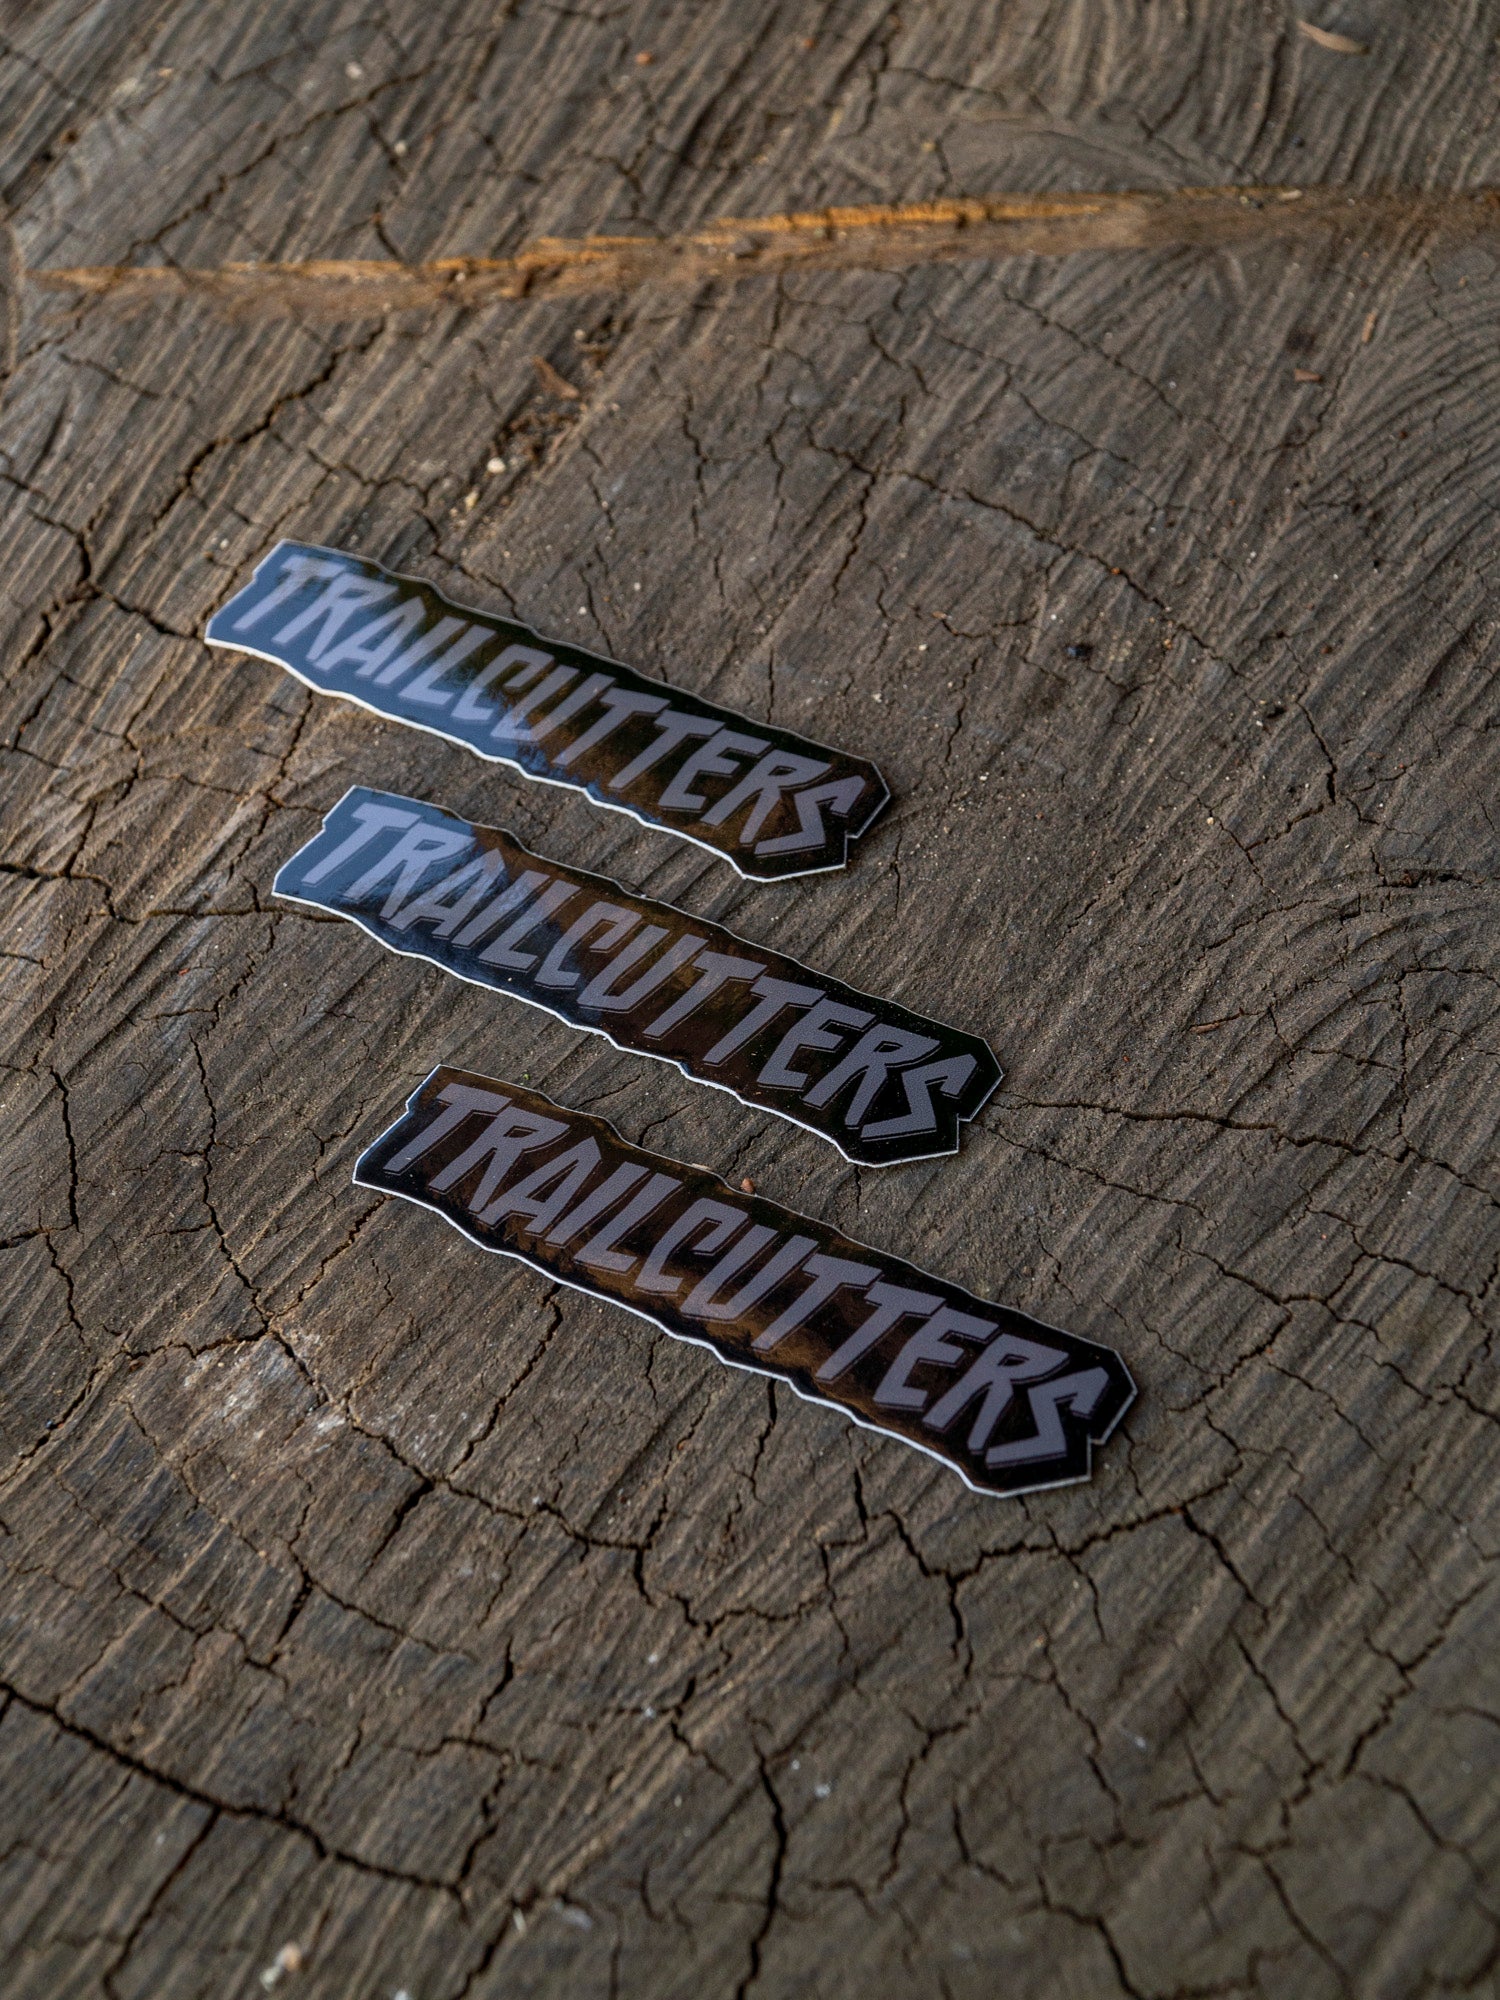 Trailcutters Heavy Duty Sticker 3 Pack